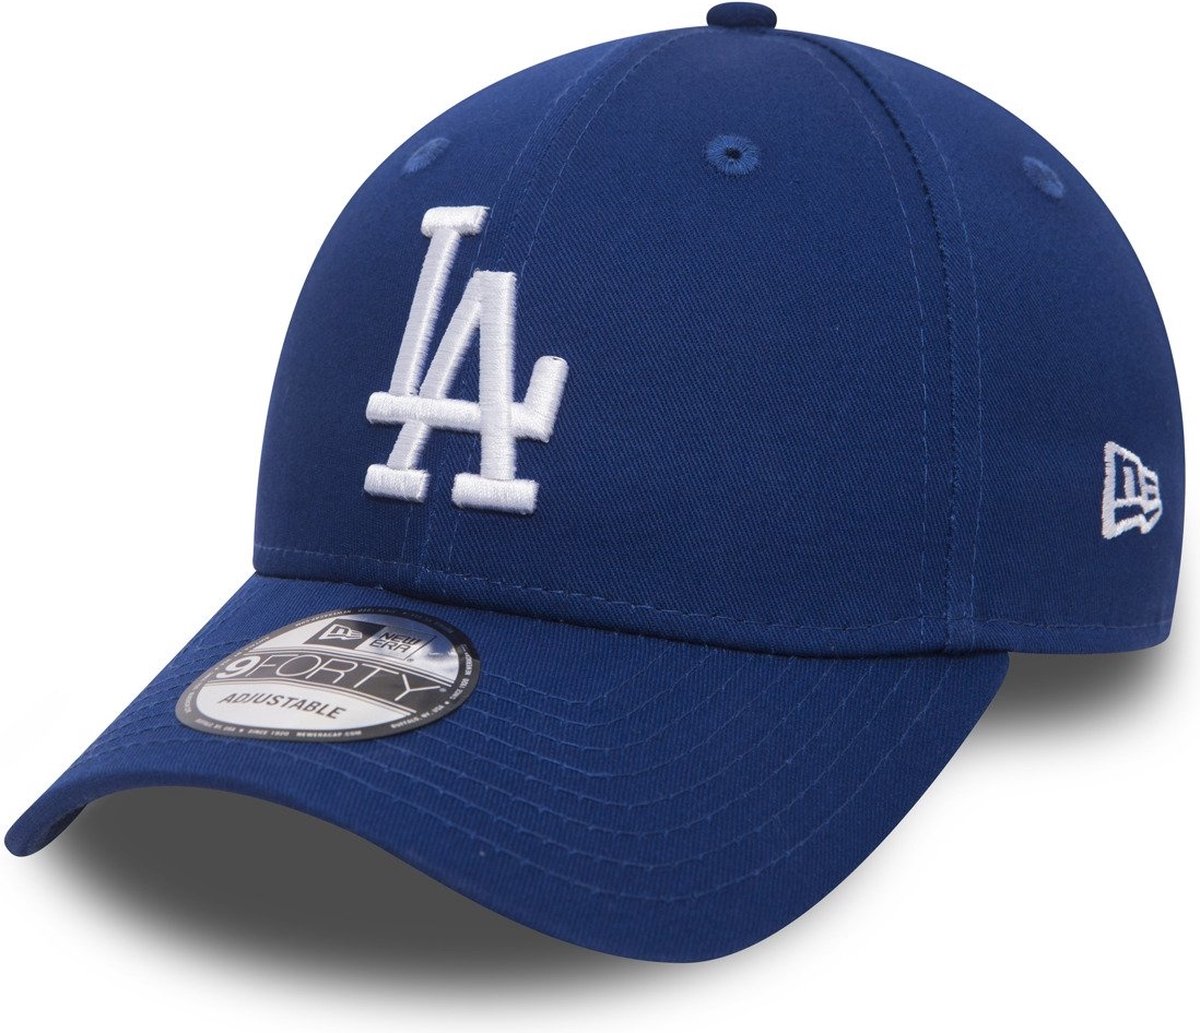 New Era LEAGUE ESSENTIAL 9FORTY Los Angeles Dodgers Cap - Blue - One size - New Era